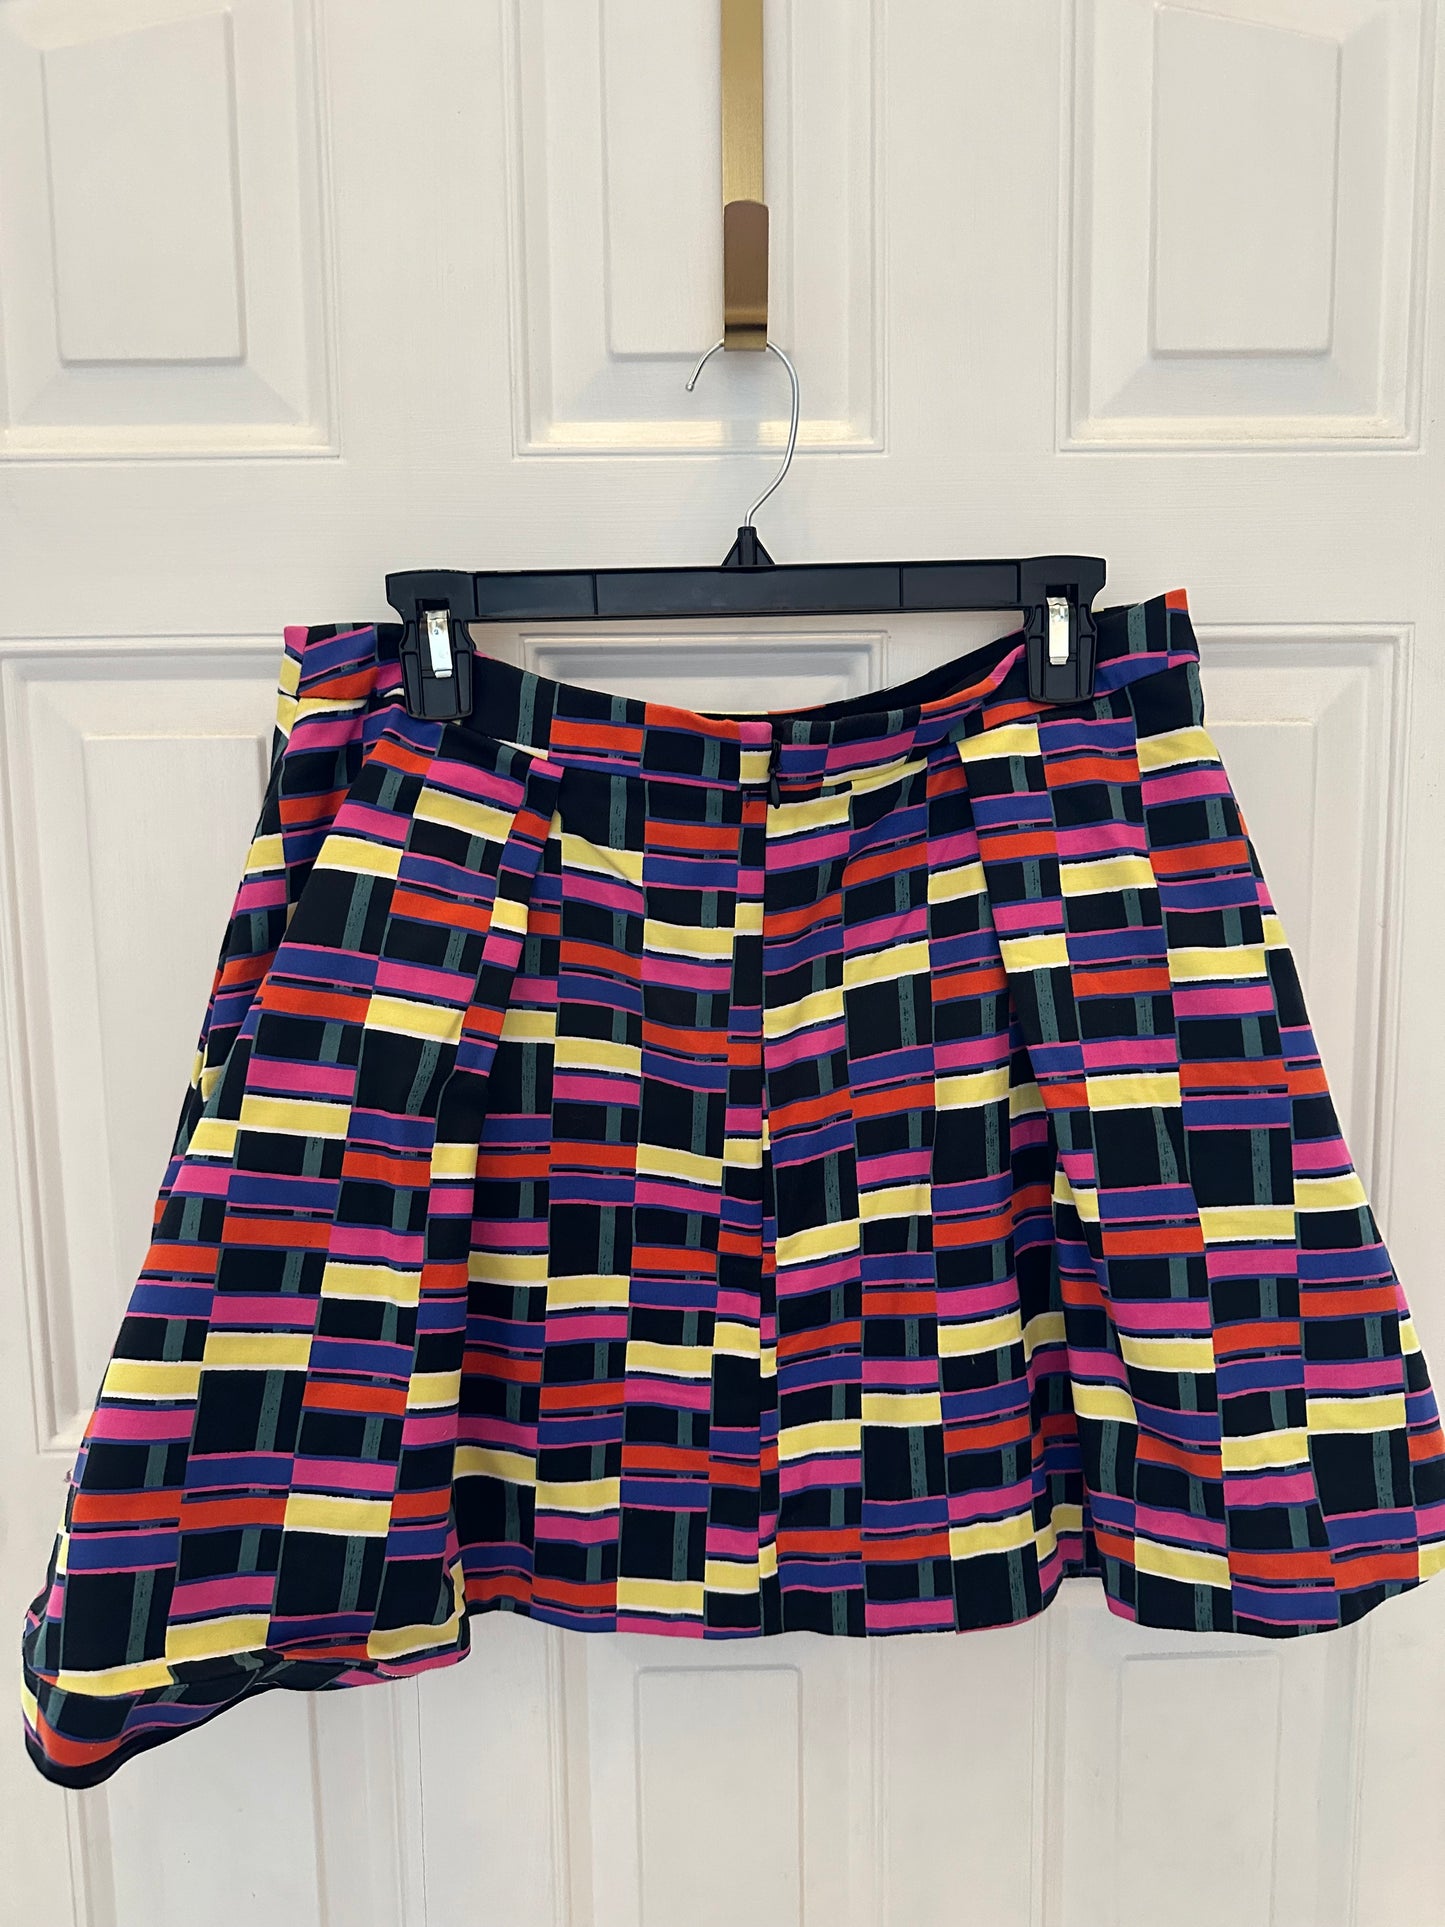 Kate Spade Women’s Skirt Sz 12 Black Yellow Pink